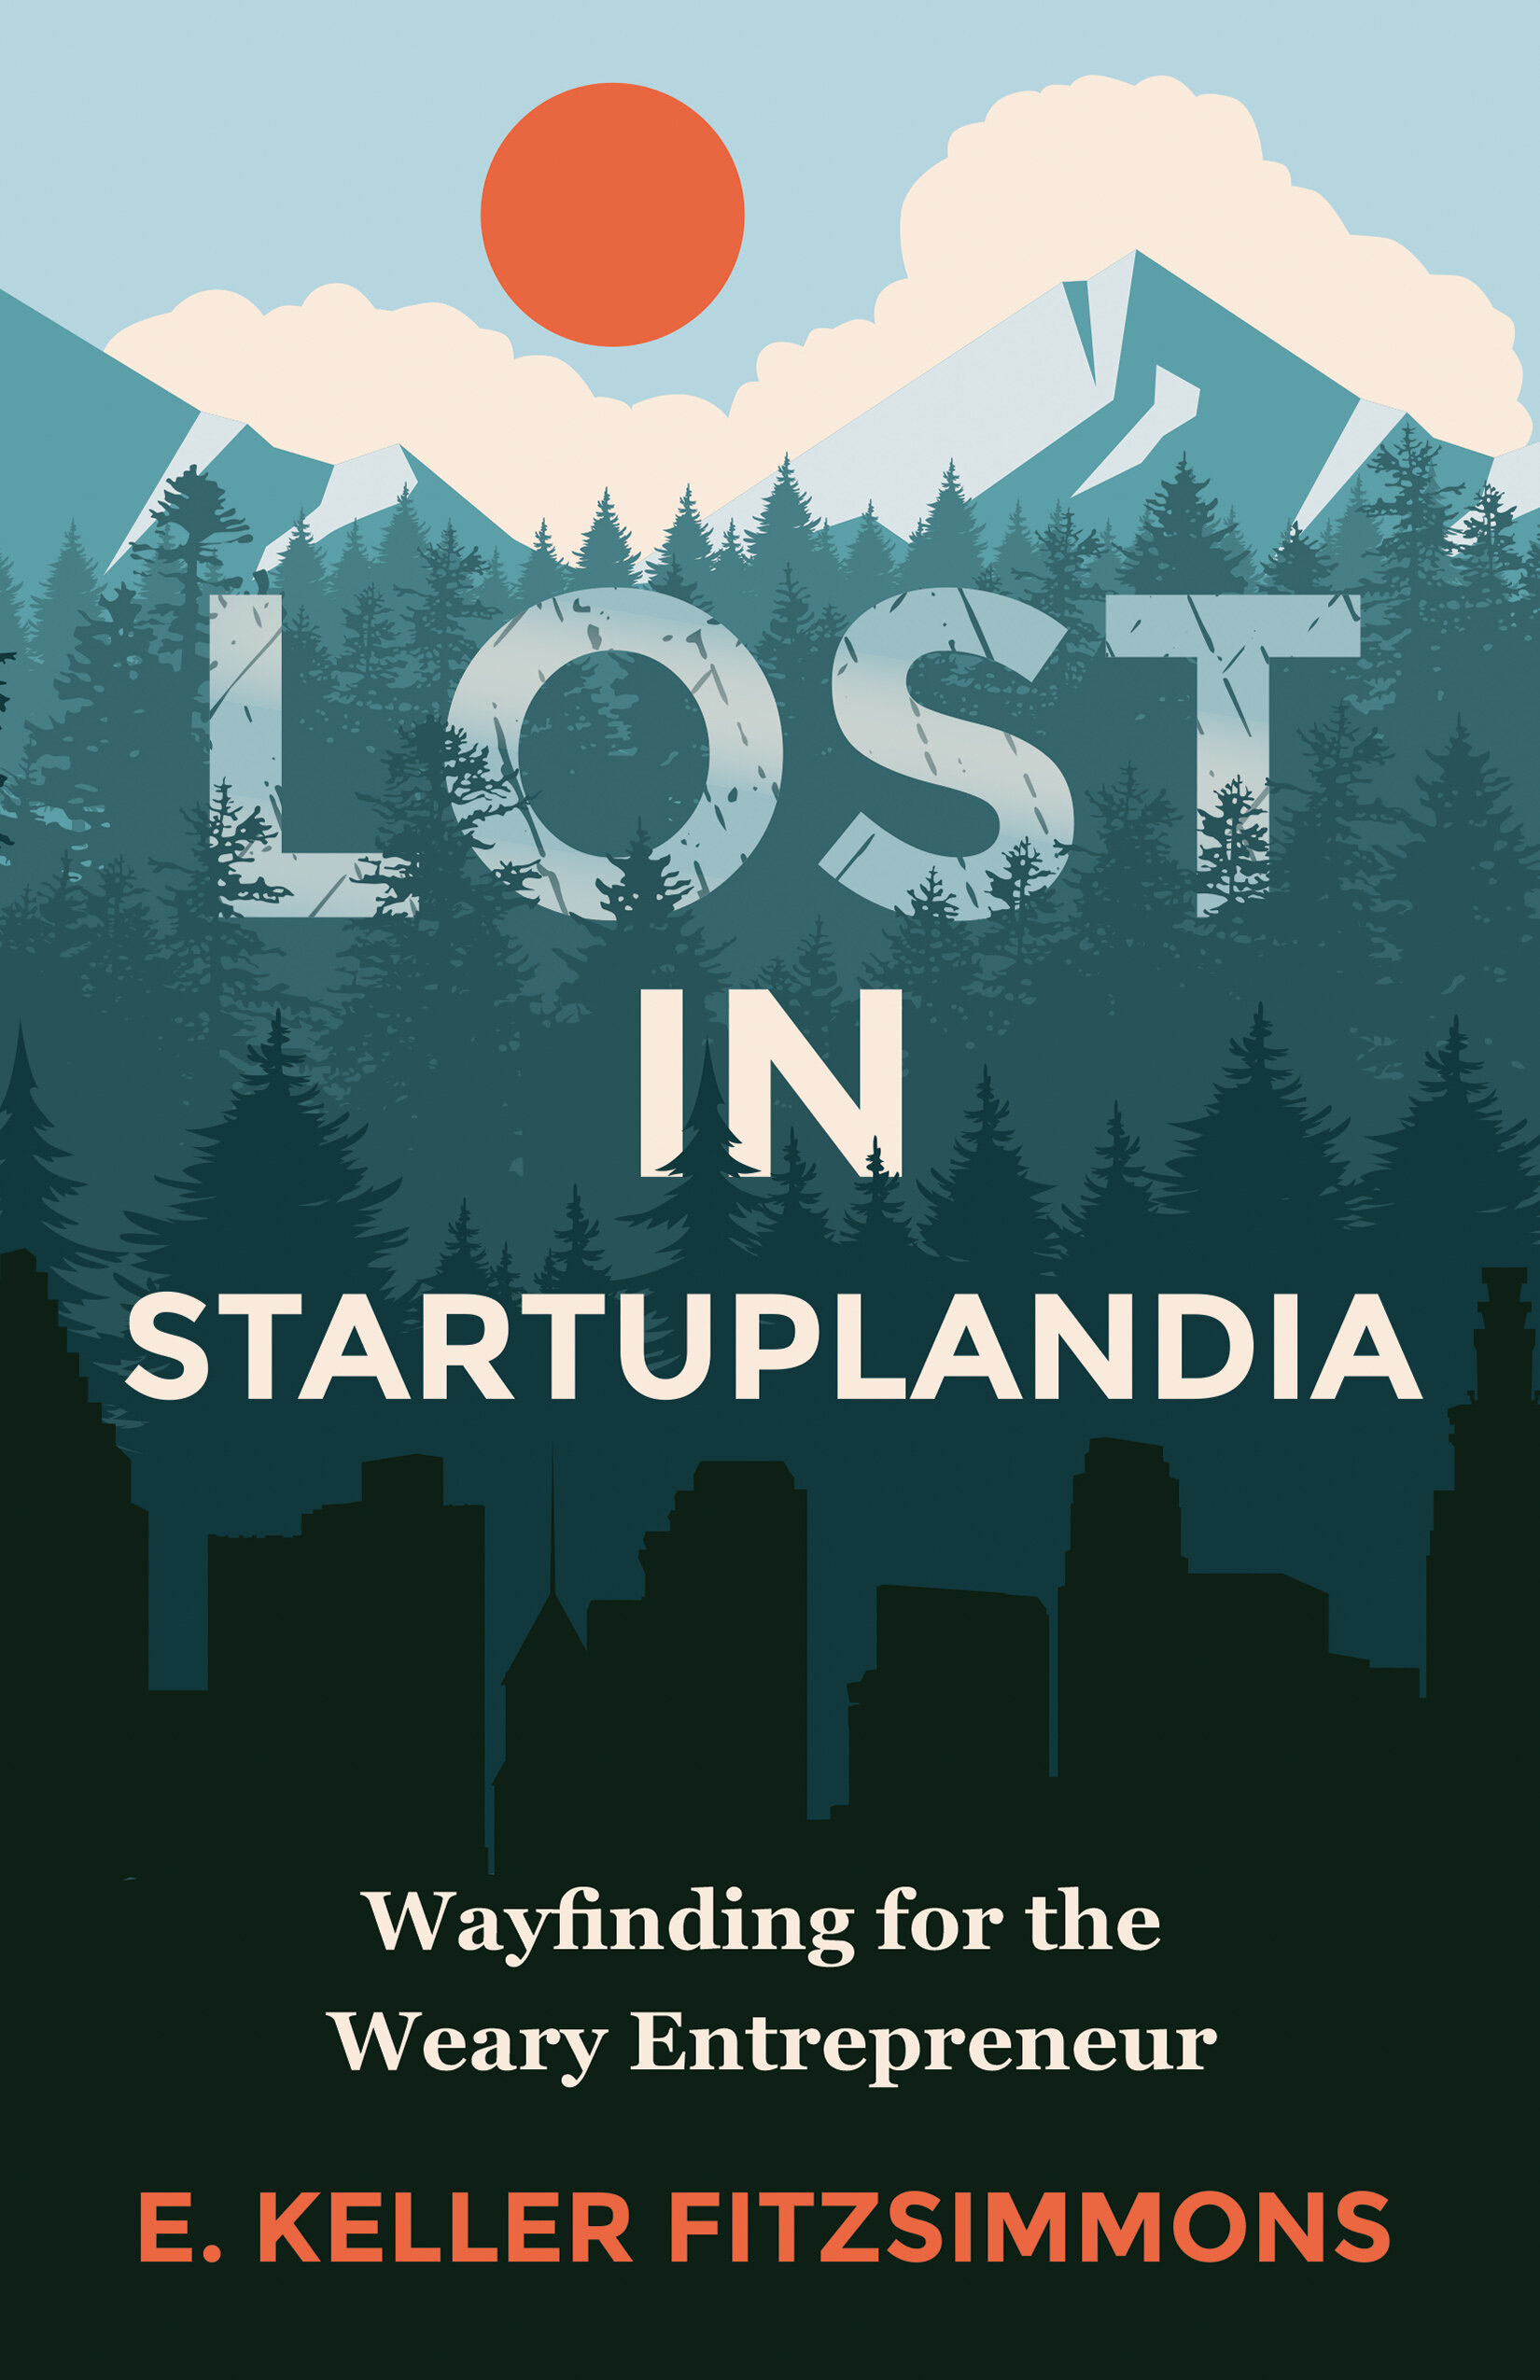 Lost in Startuplandia - Book Cover Image.jpg